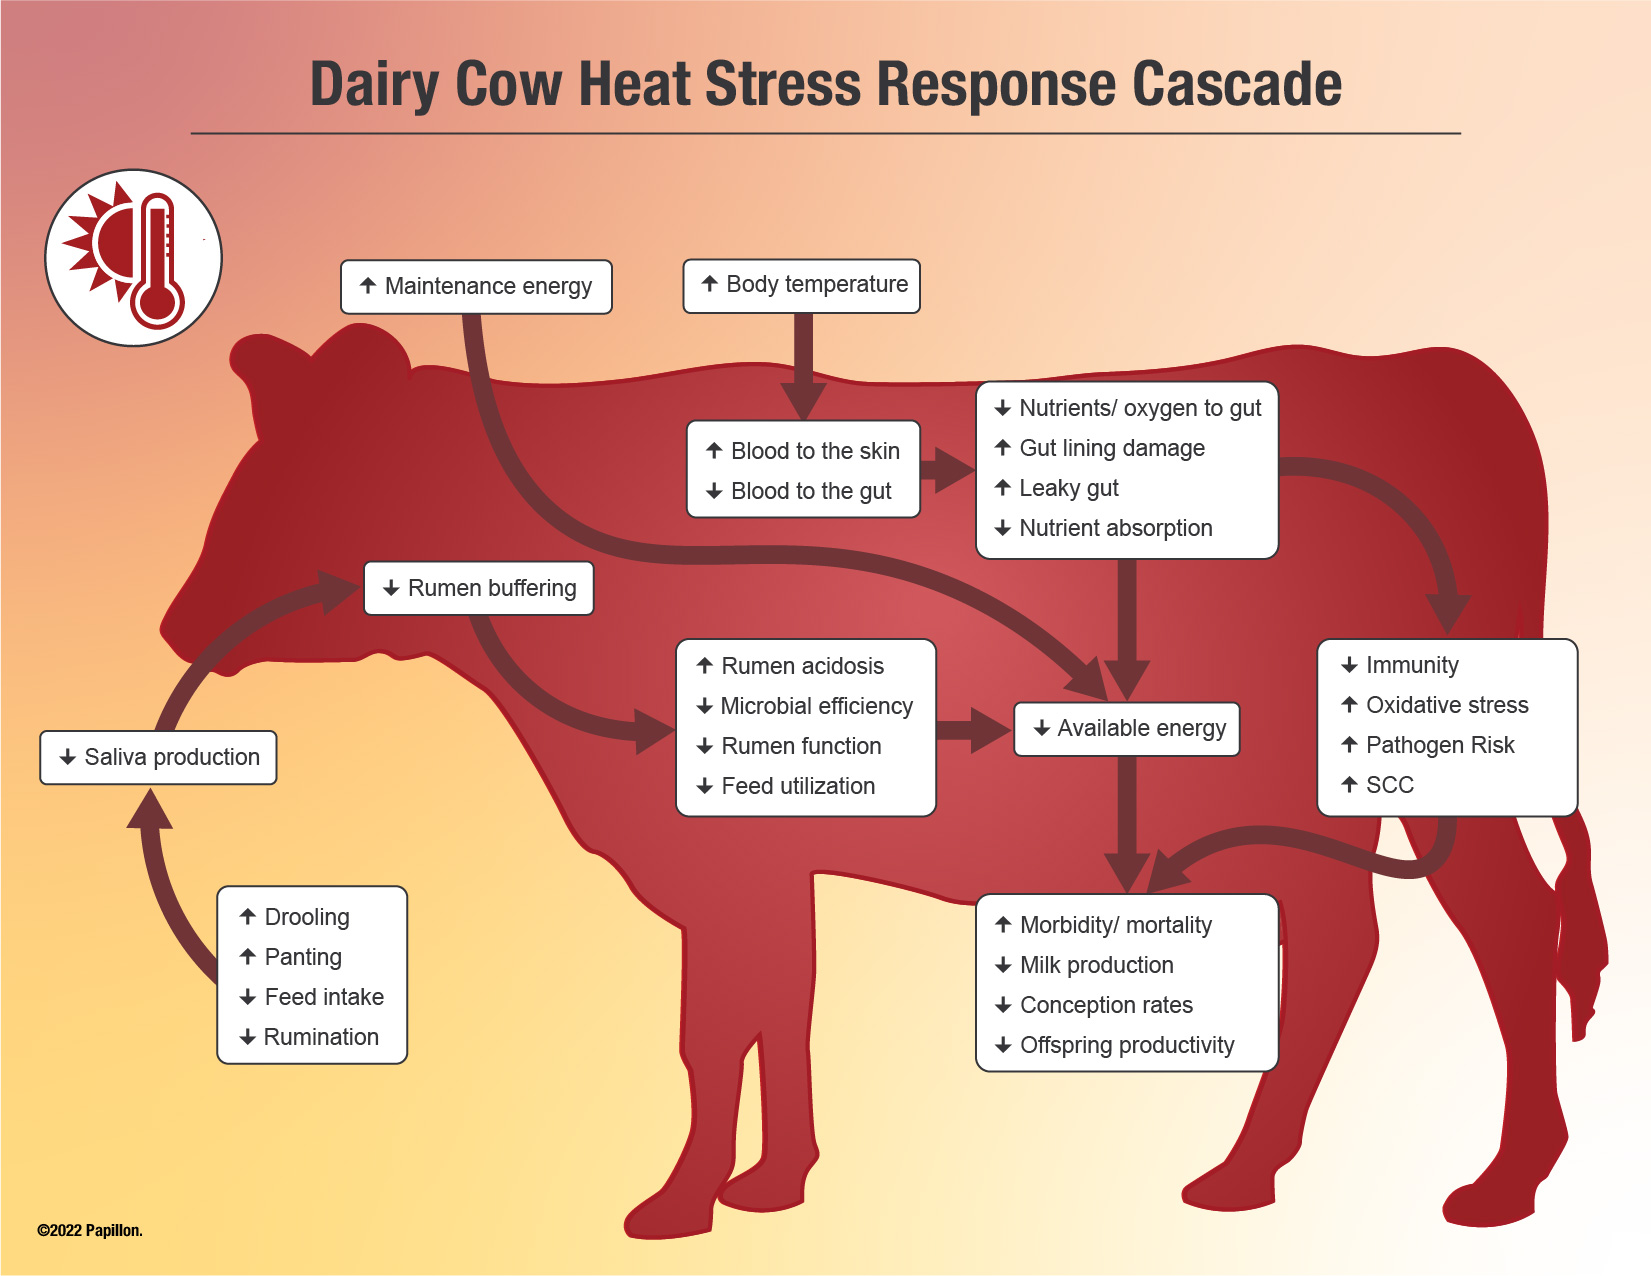 Dairy cow heat stress response cascade